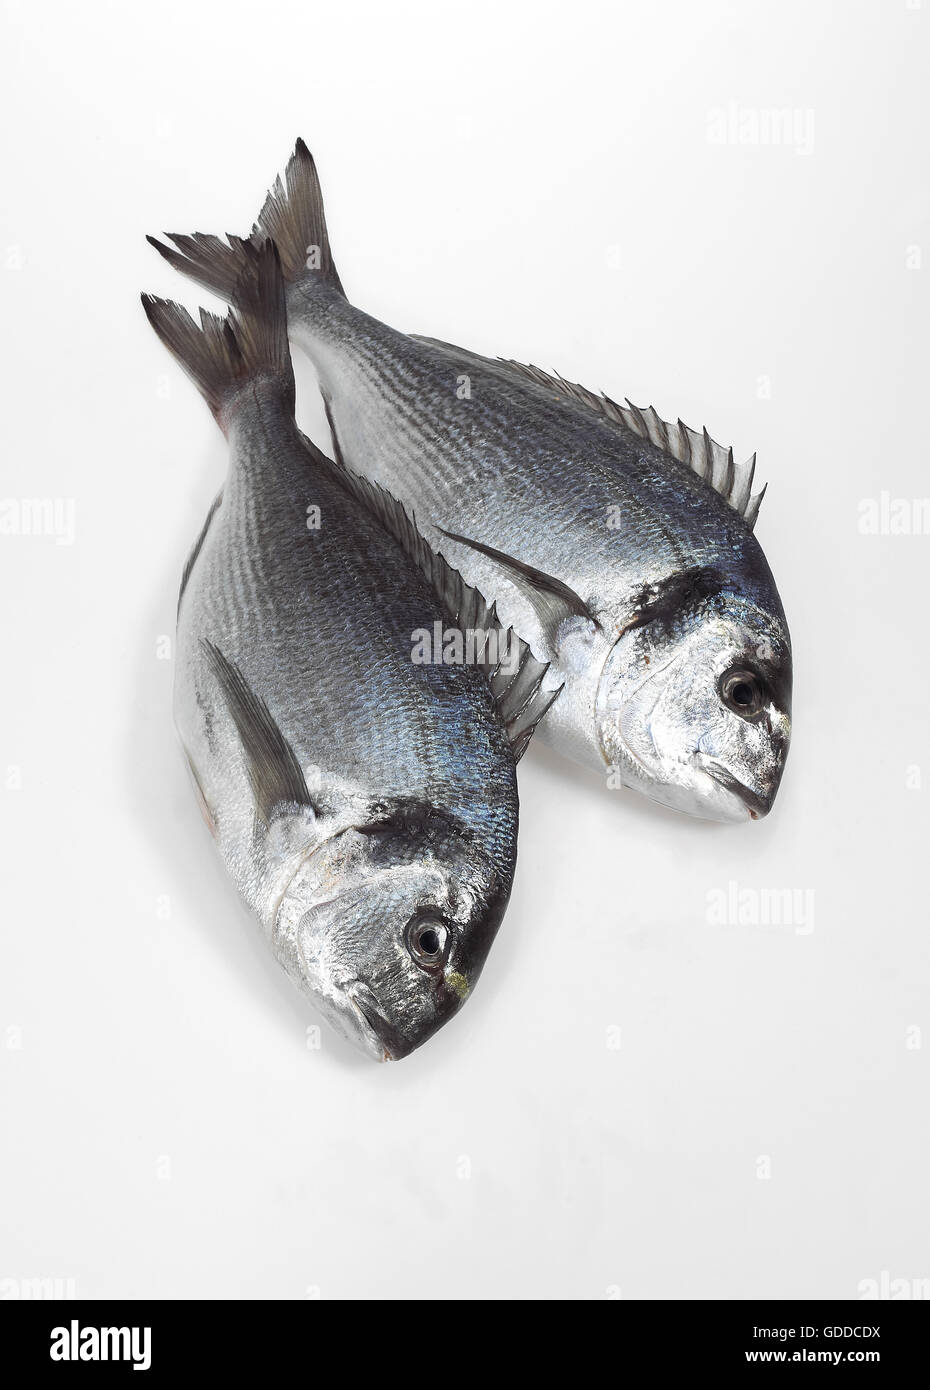 Gilthead Bream, sparus auratus, Fresh Fish against White Background Stock Photo